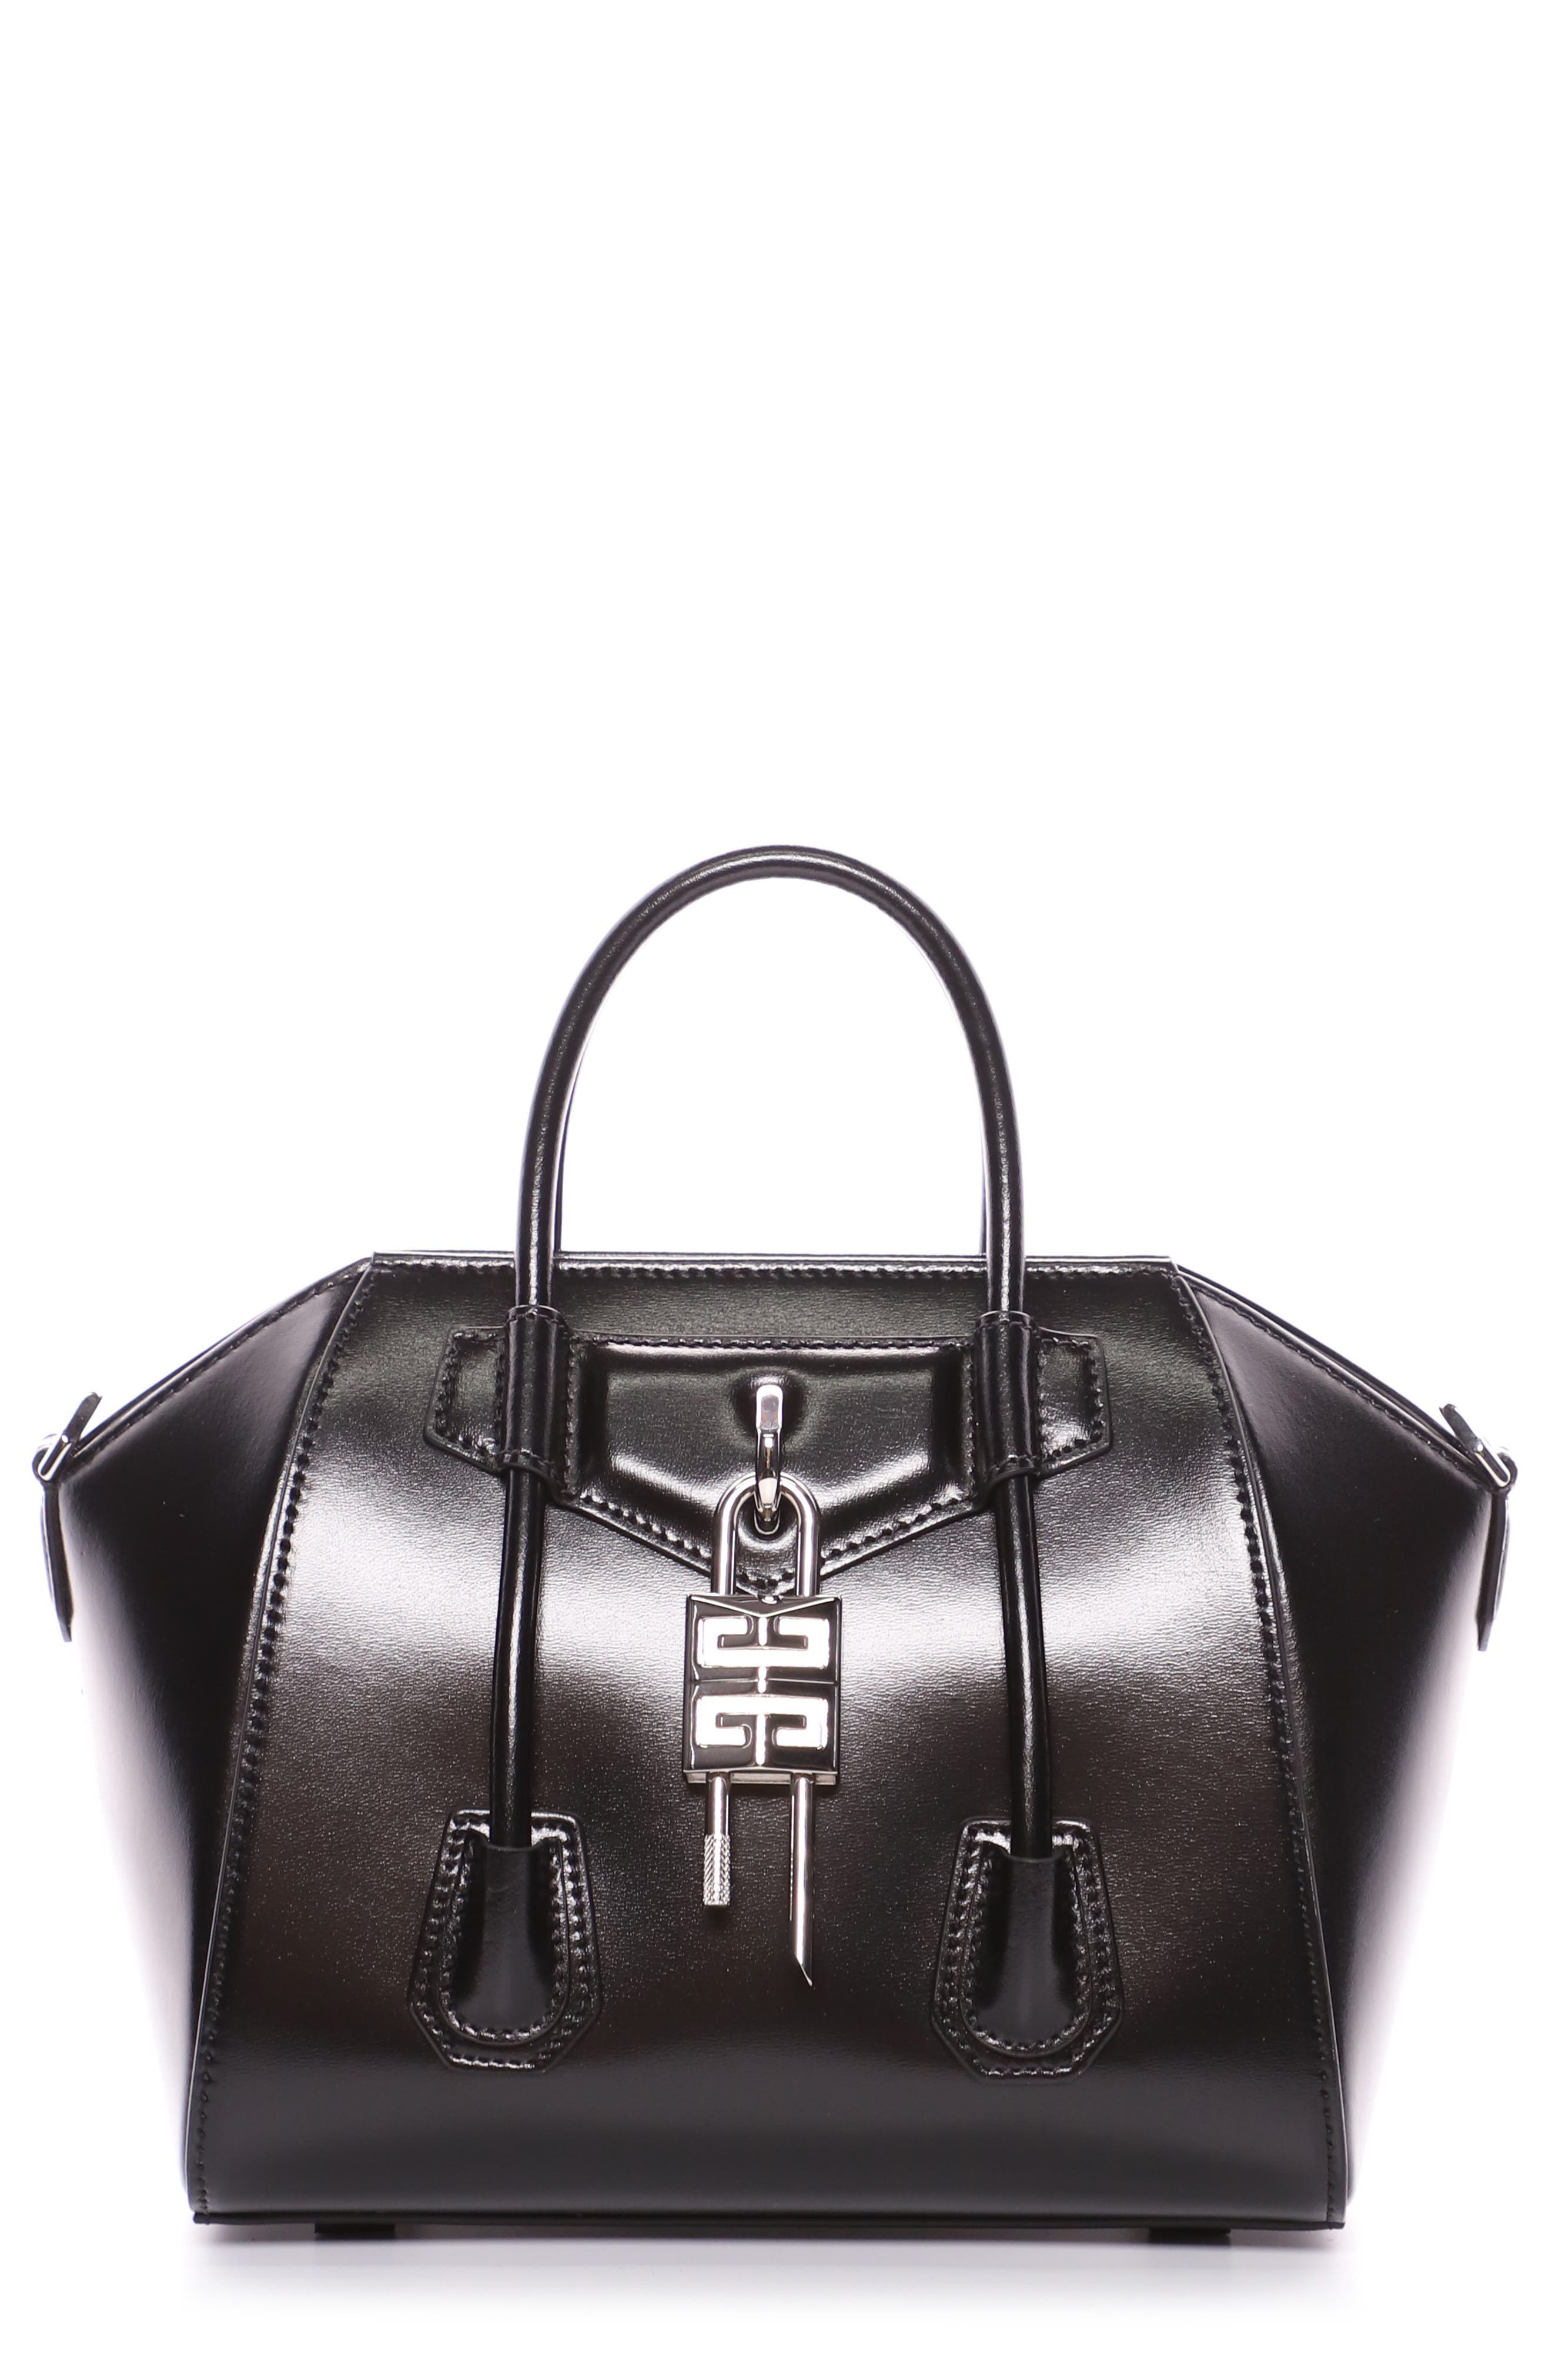 Givenchy Mini Antigona Lock Leather Satchel in Black